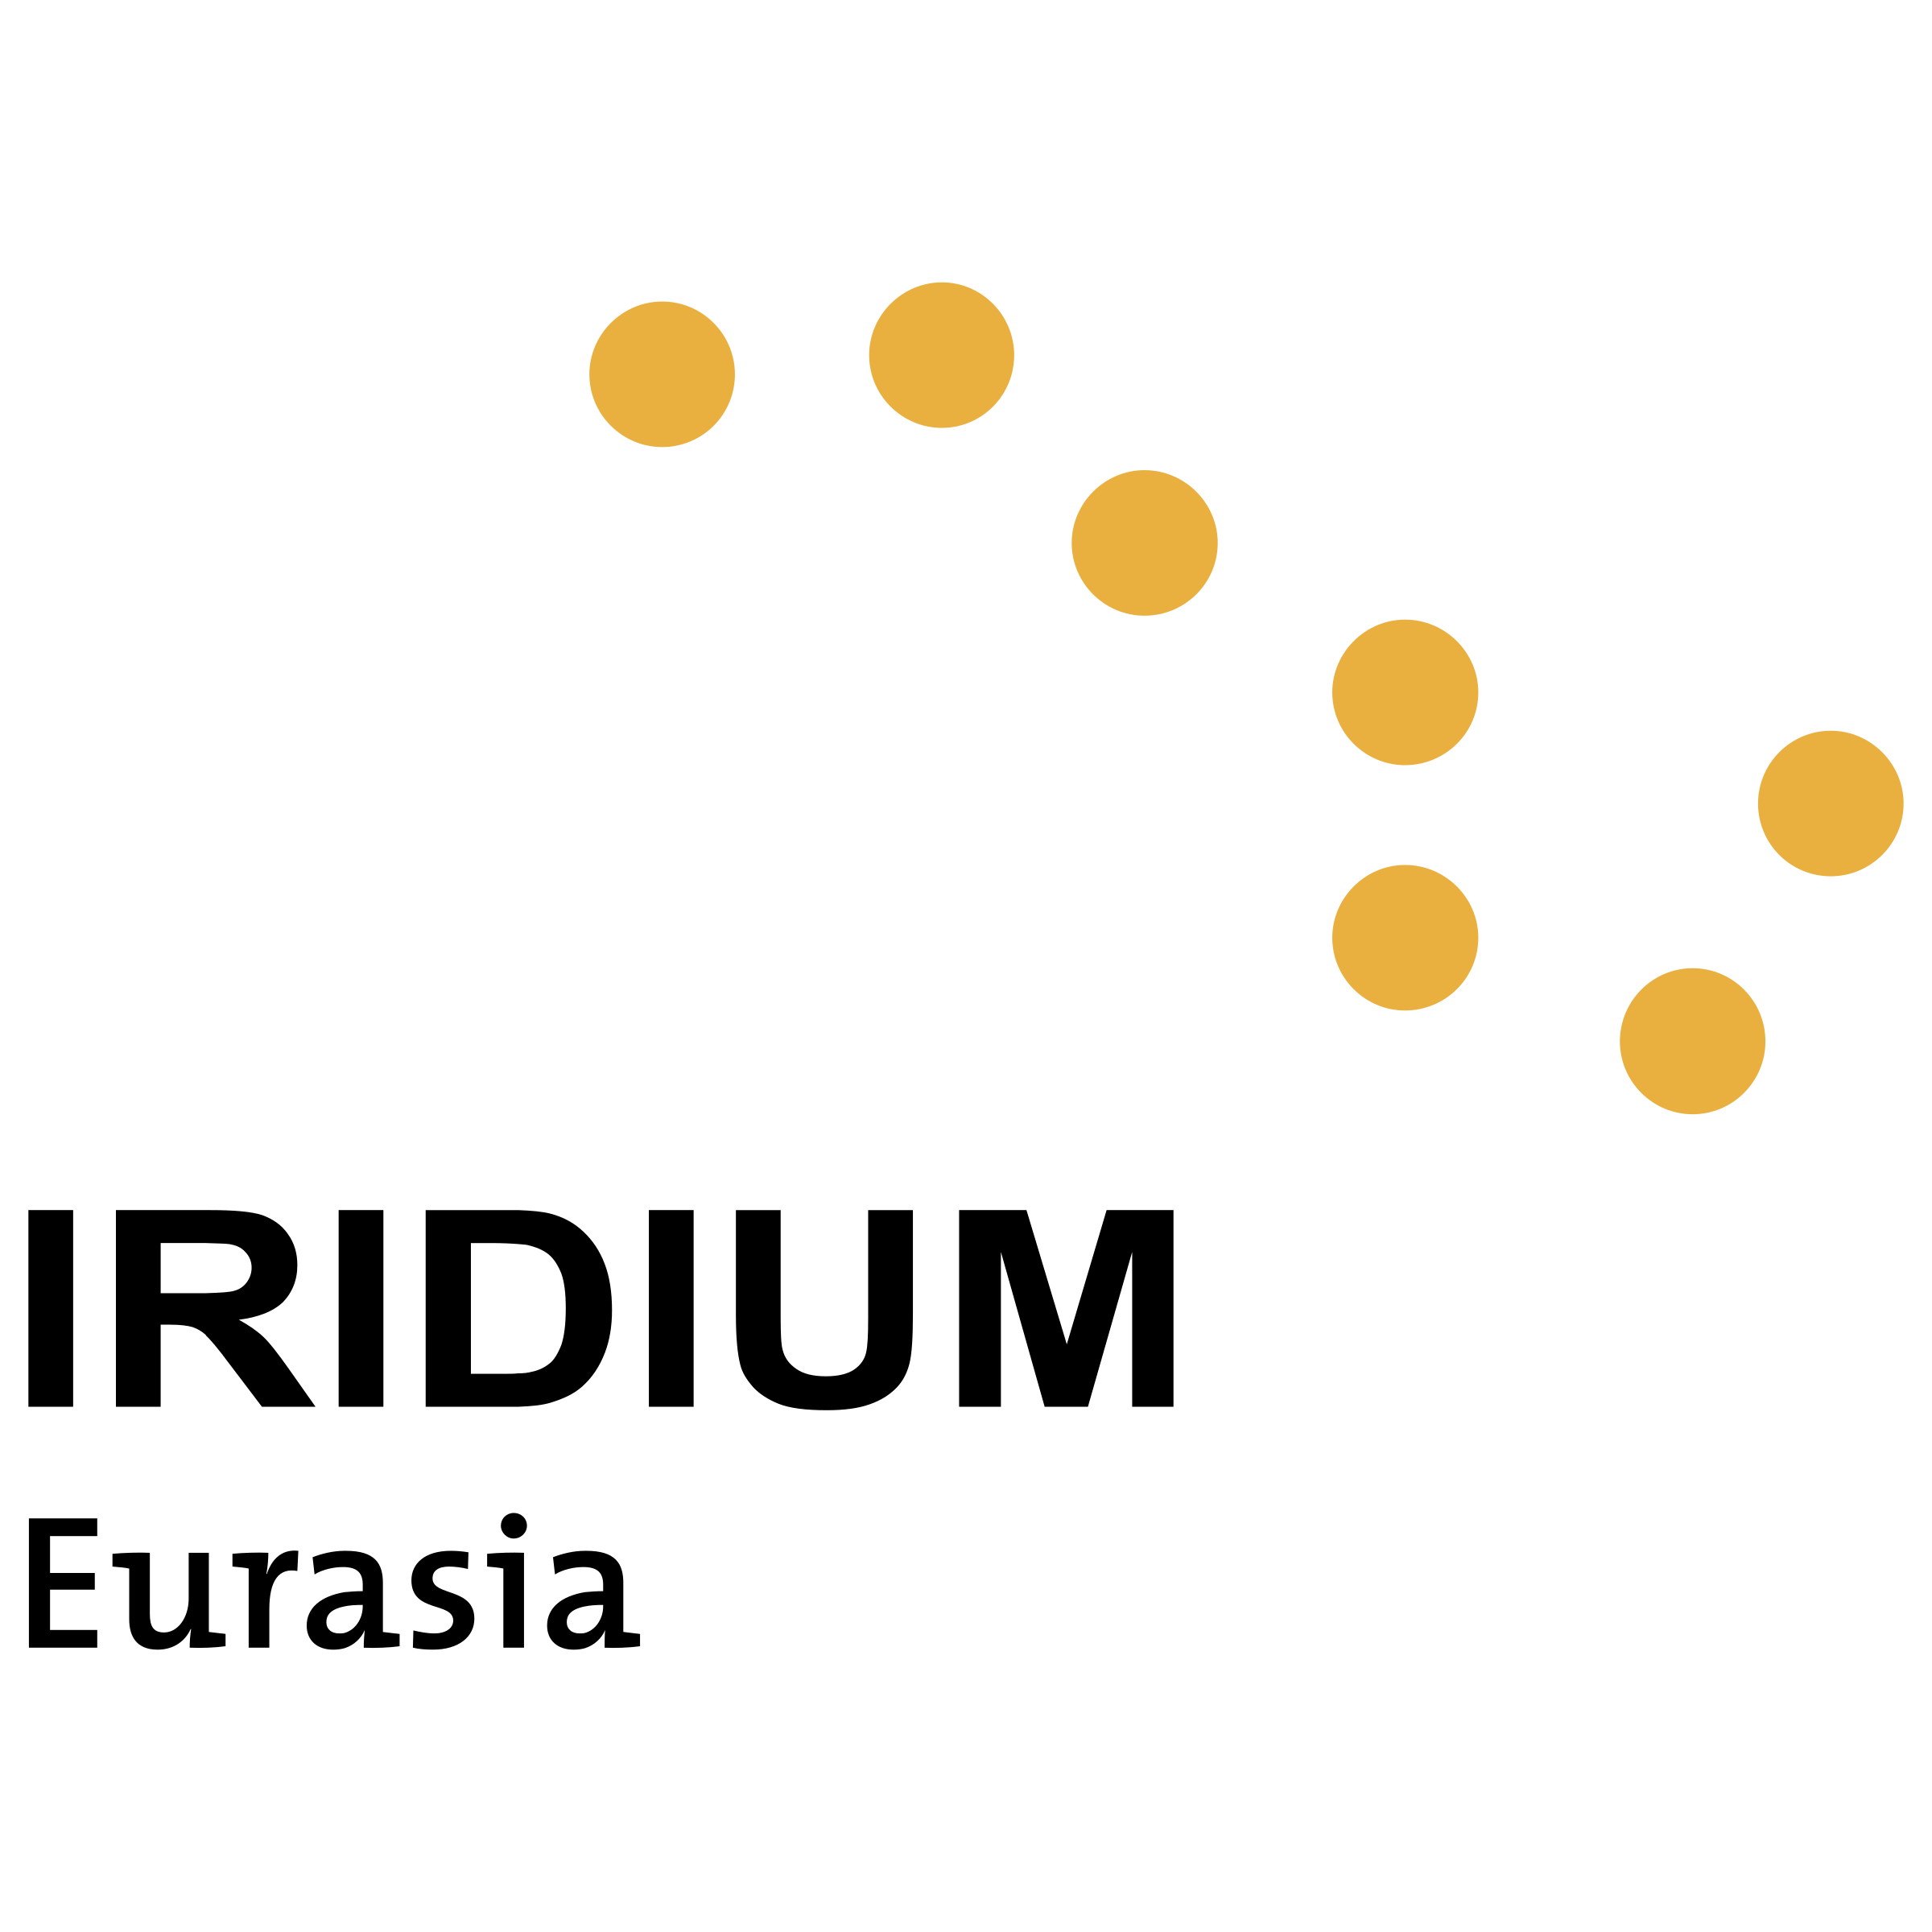 Iridium Logo - Iridium Eurasia Logo PNG Transparent & SVG Vector - Freebie Supply